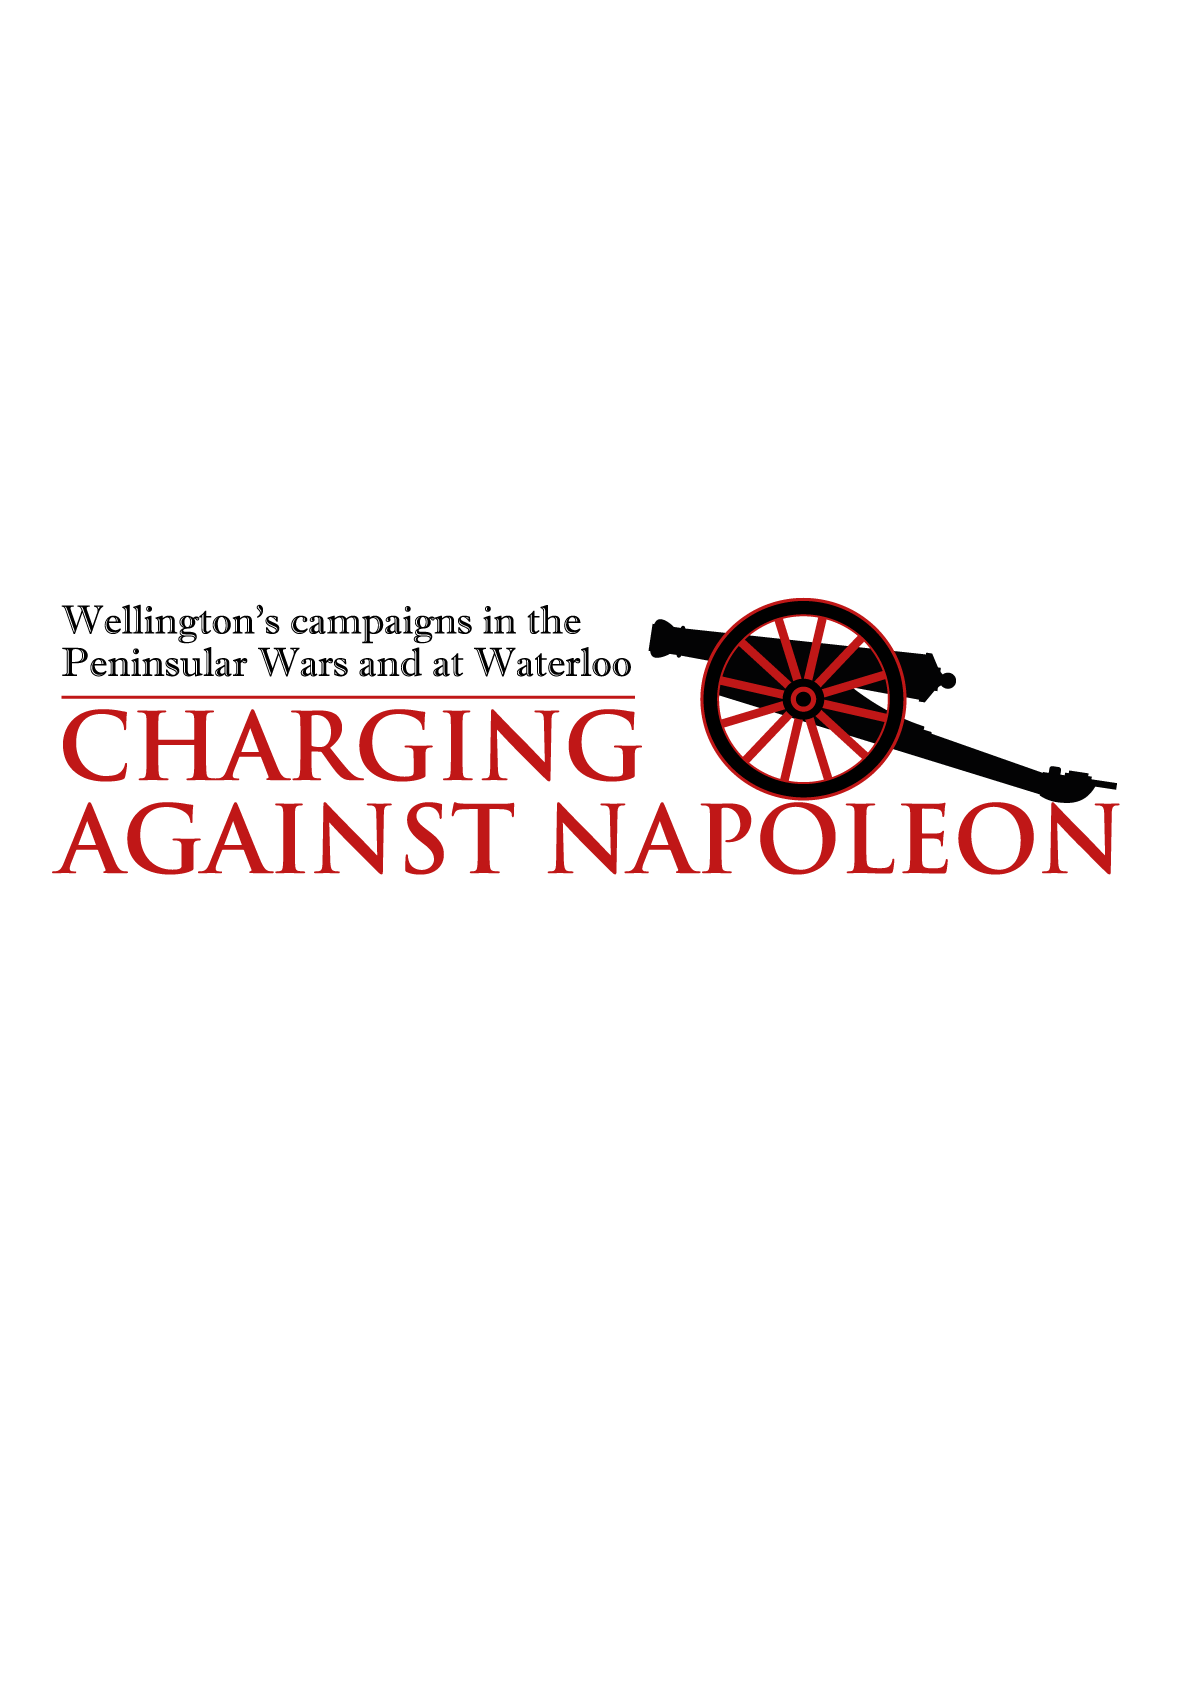 Charging Logo - Charging-logo-full - The News Room